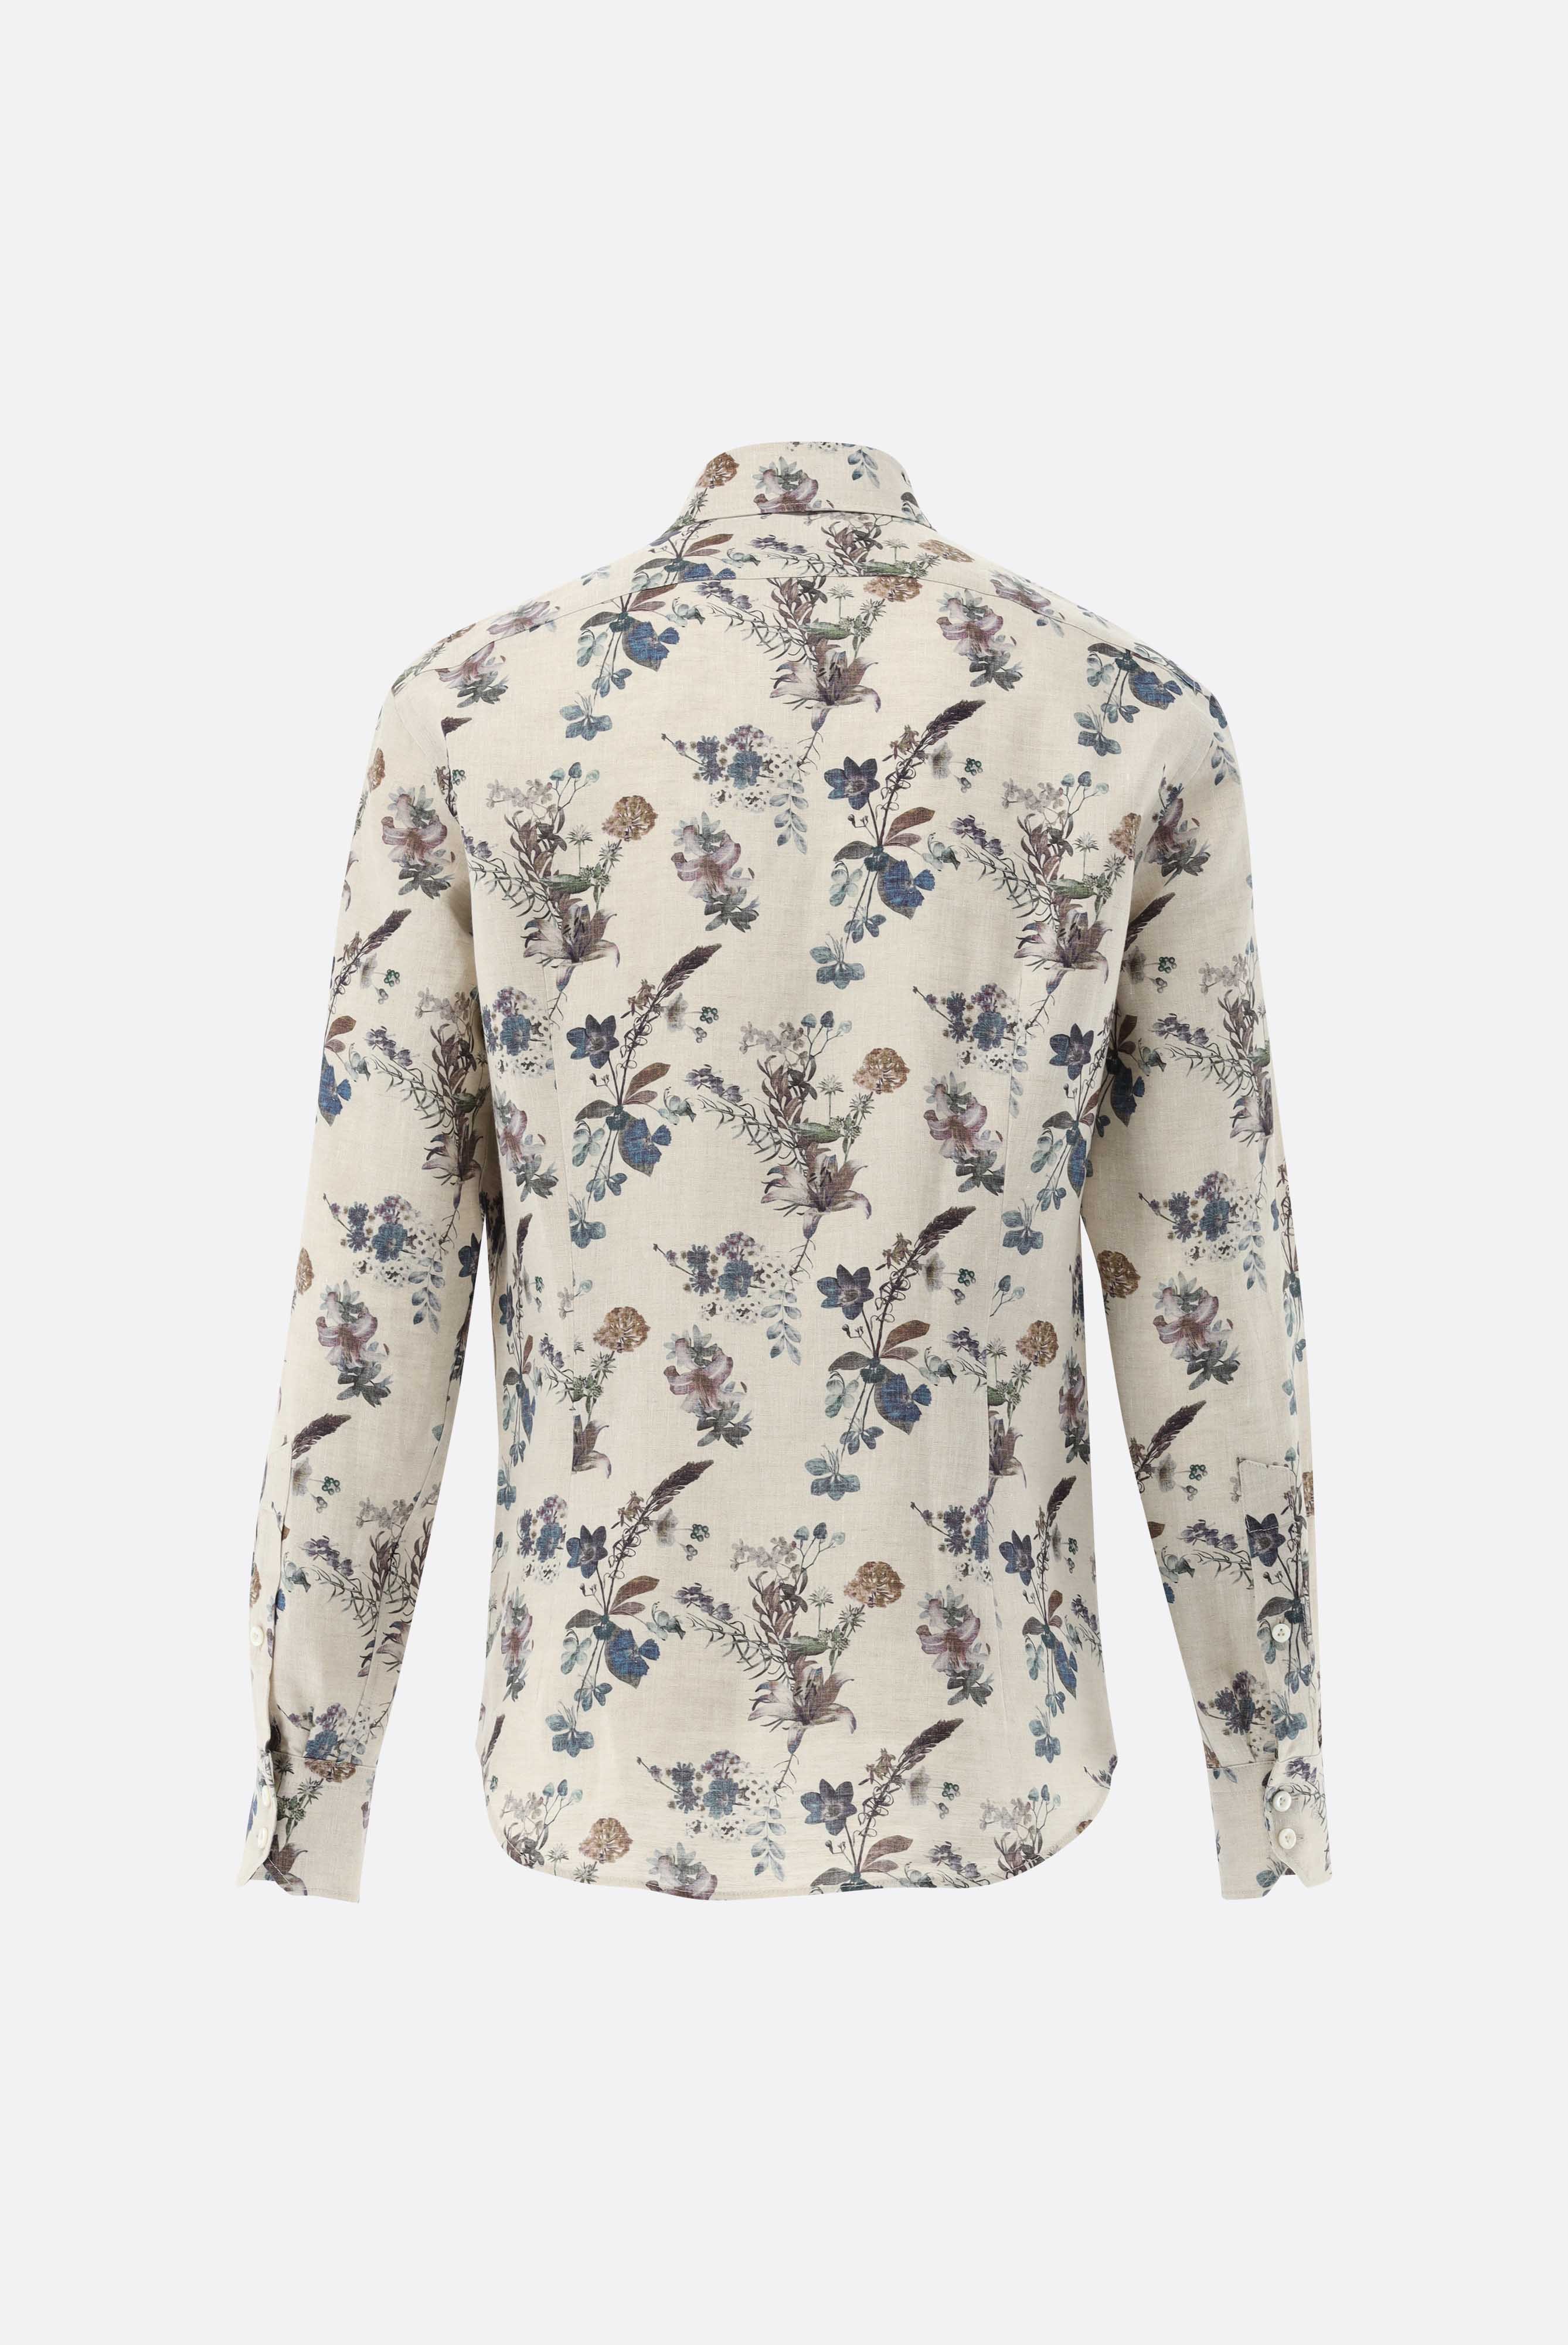 Casual Hemden+Leinenhemd mit Blumen-Druck Tailor Fit+20.2016.9V.172037.118.39